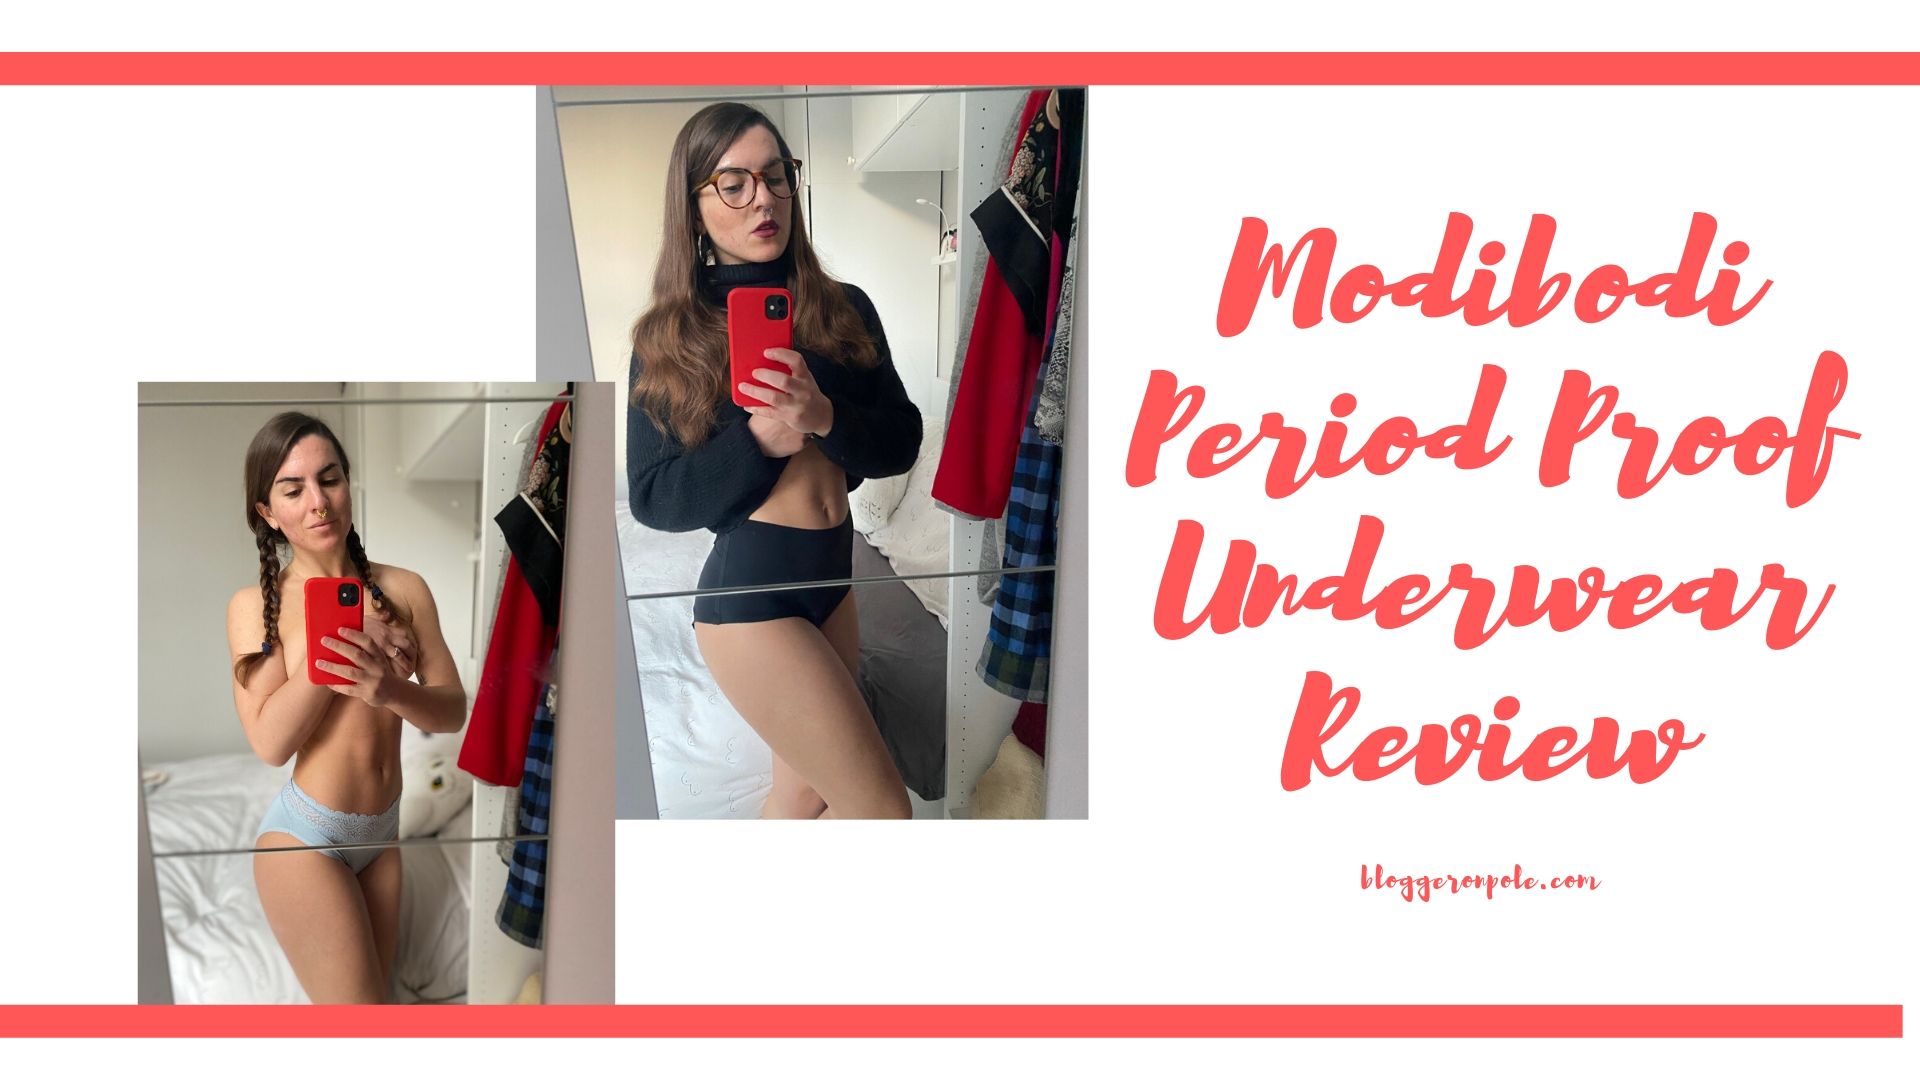 Modibodi Period Underwear Review